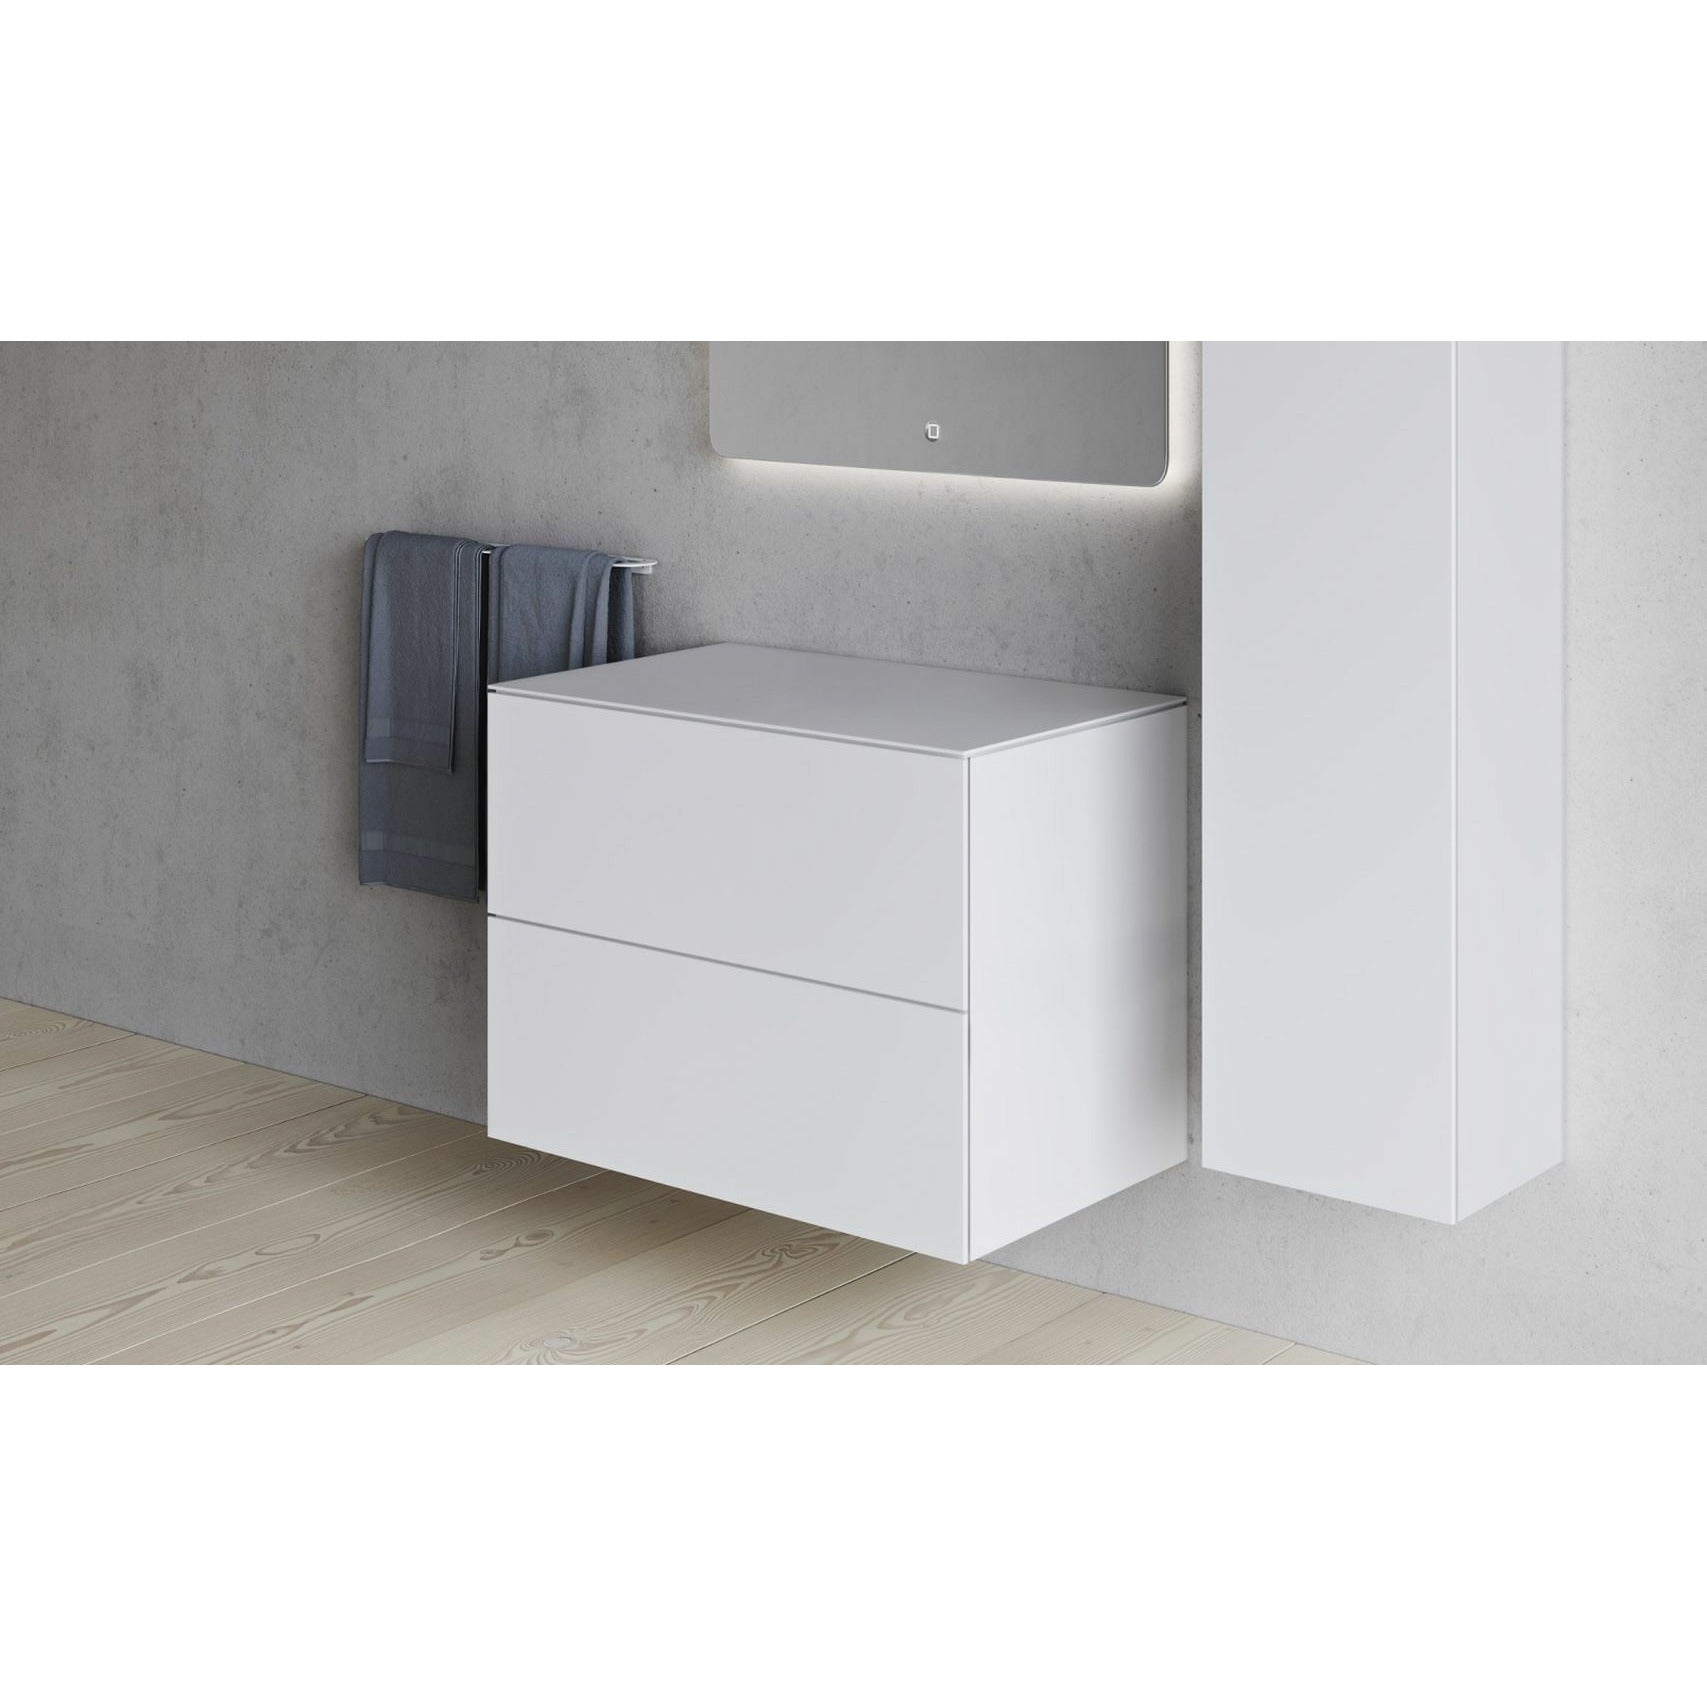 Copenhagen Bath Sq2 Double Cabinet With Countertop, L80 Cm